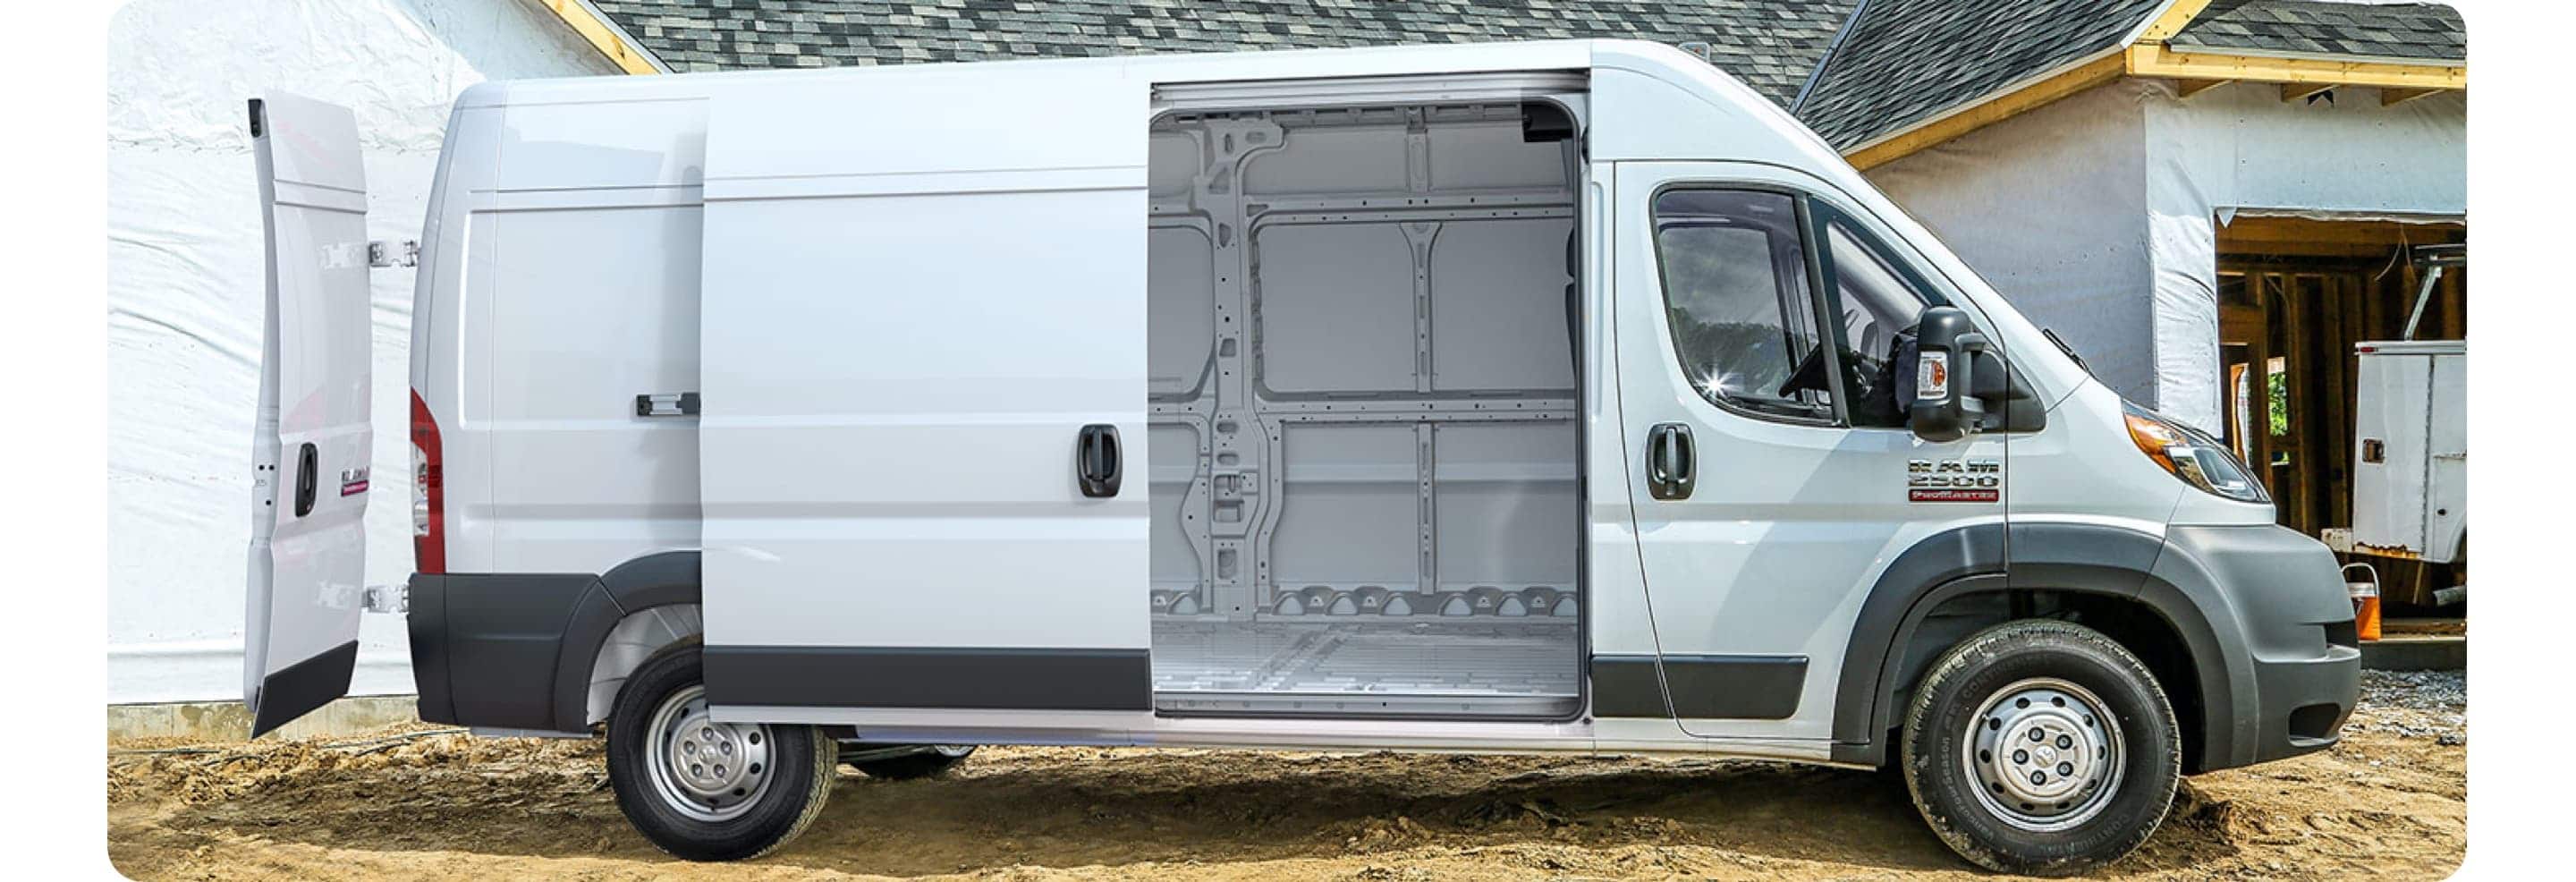 2021 Ram ProMaster® Cargo Van | Payload 